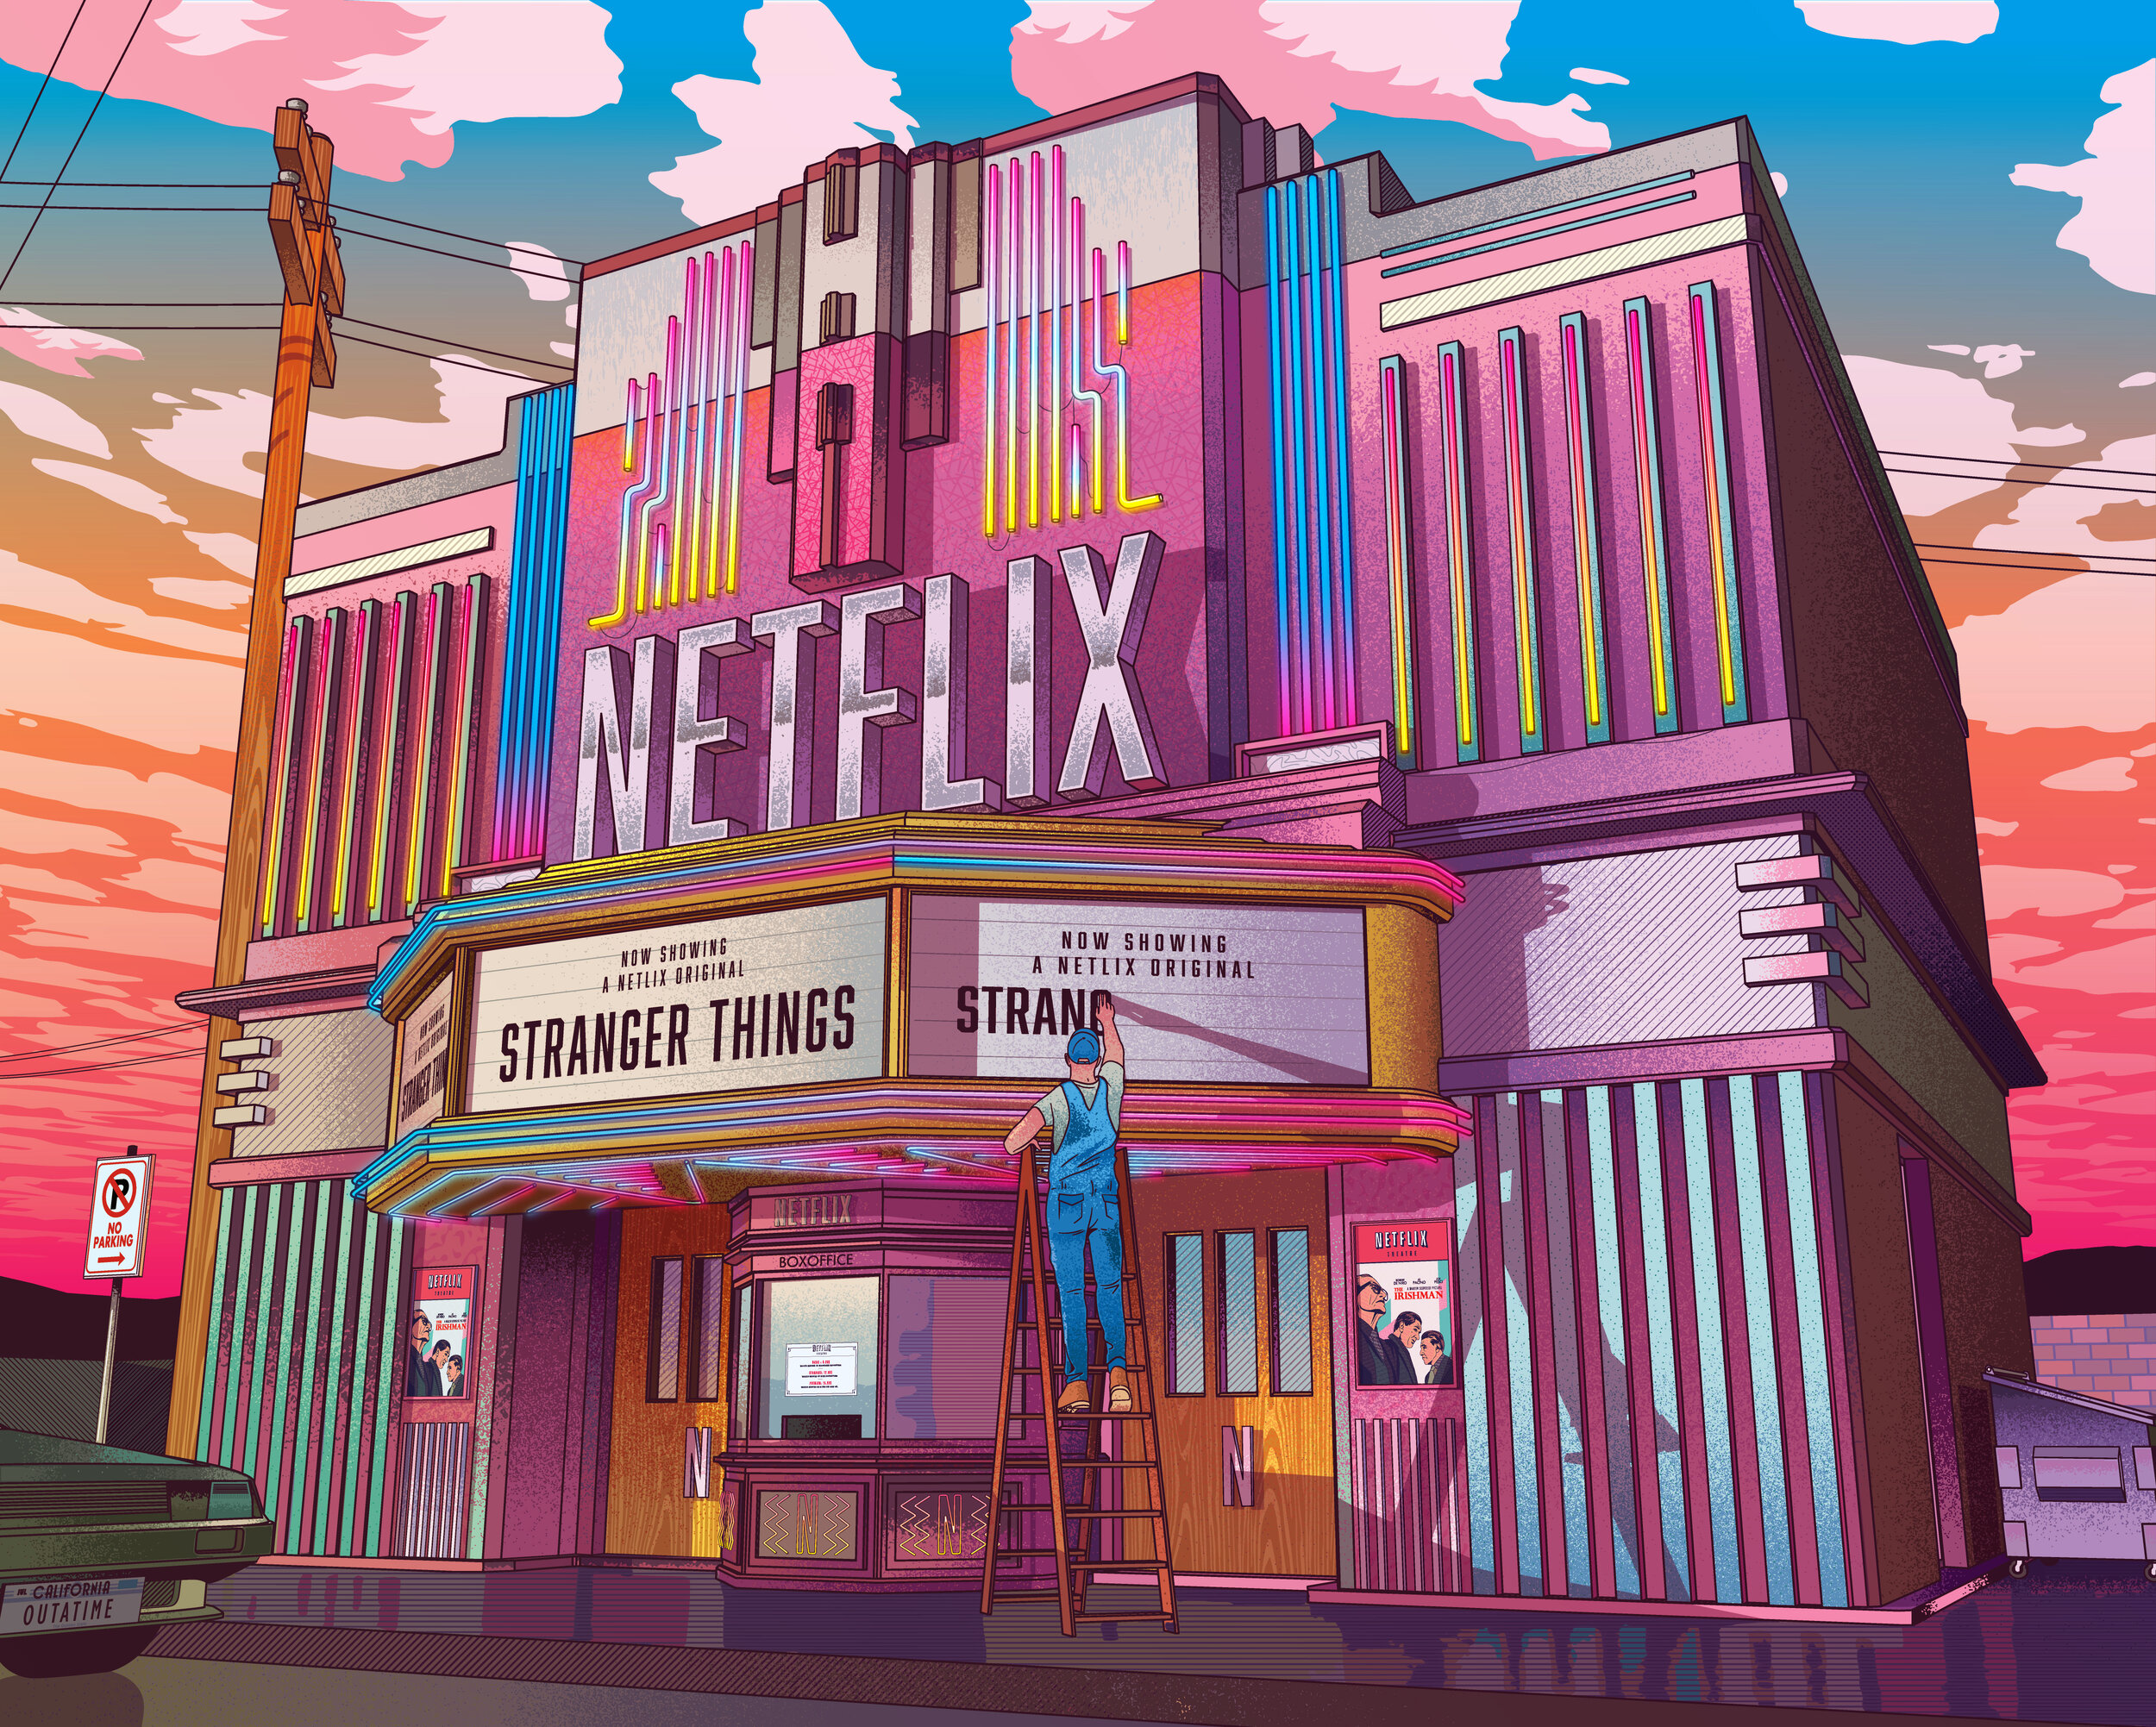 Netflix-in-nineties-2020-done-neon.jpg